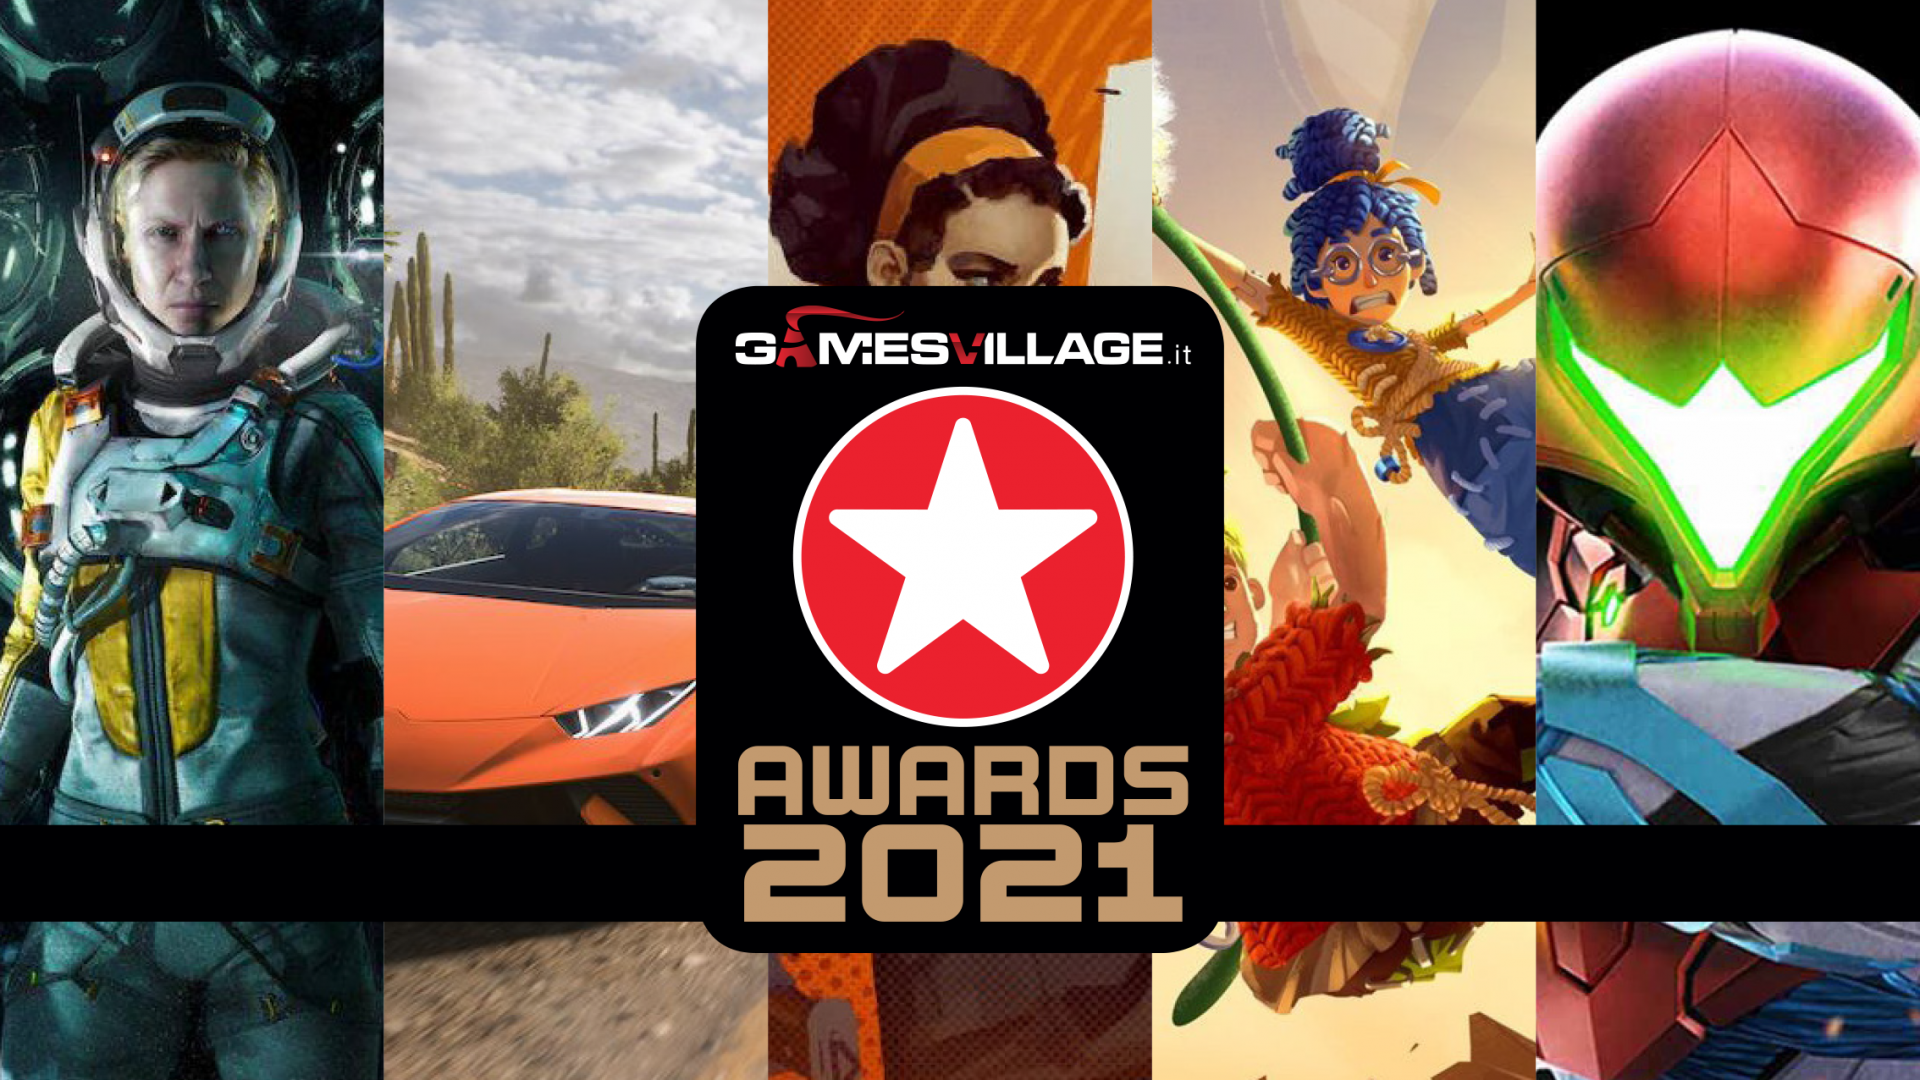 GamesVillage Awards